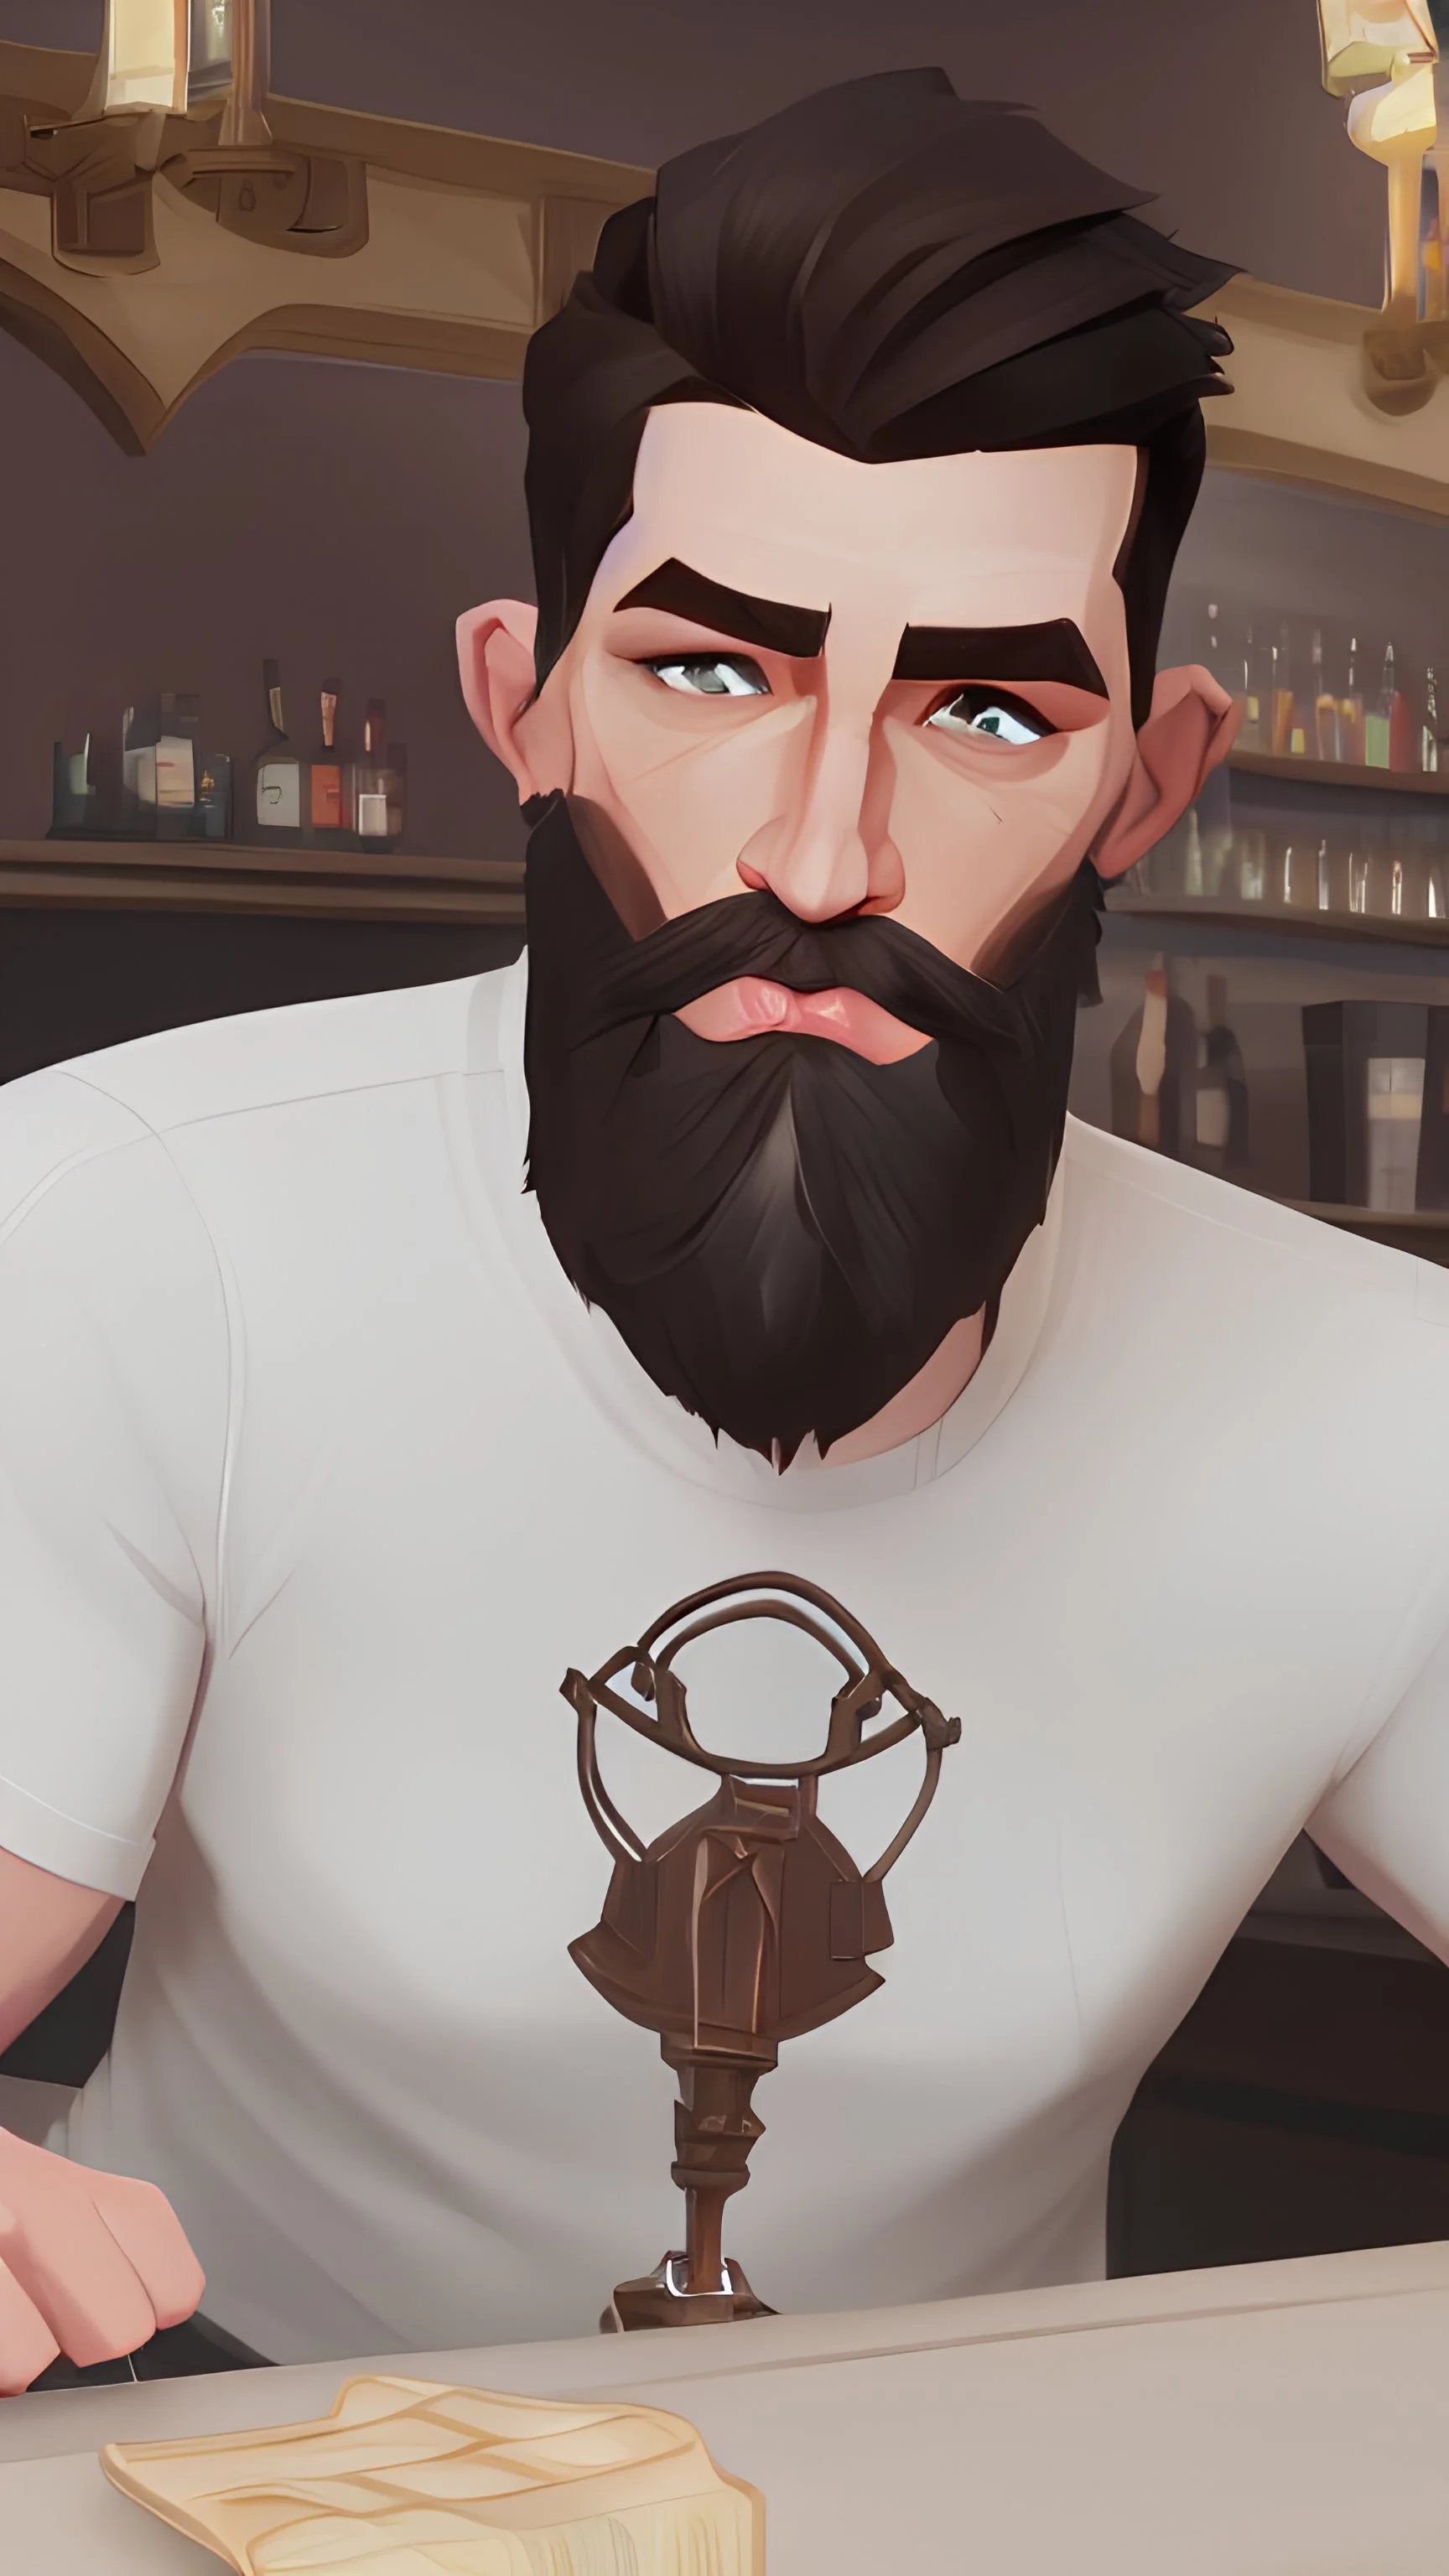 White male, dark Brown hair medium length and short beard. At a pub, candles, sitting at a bar table